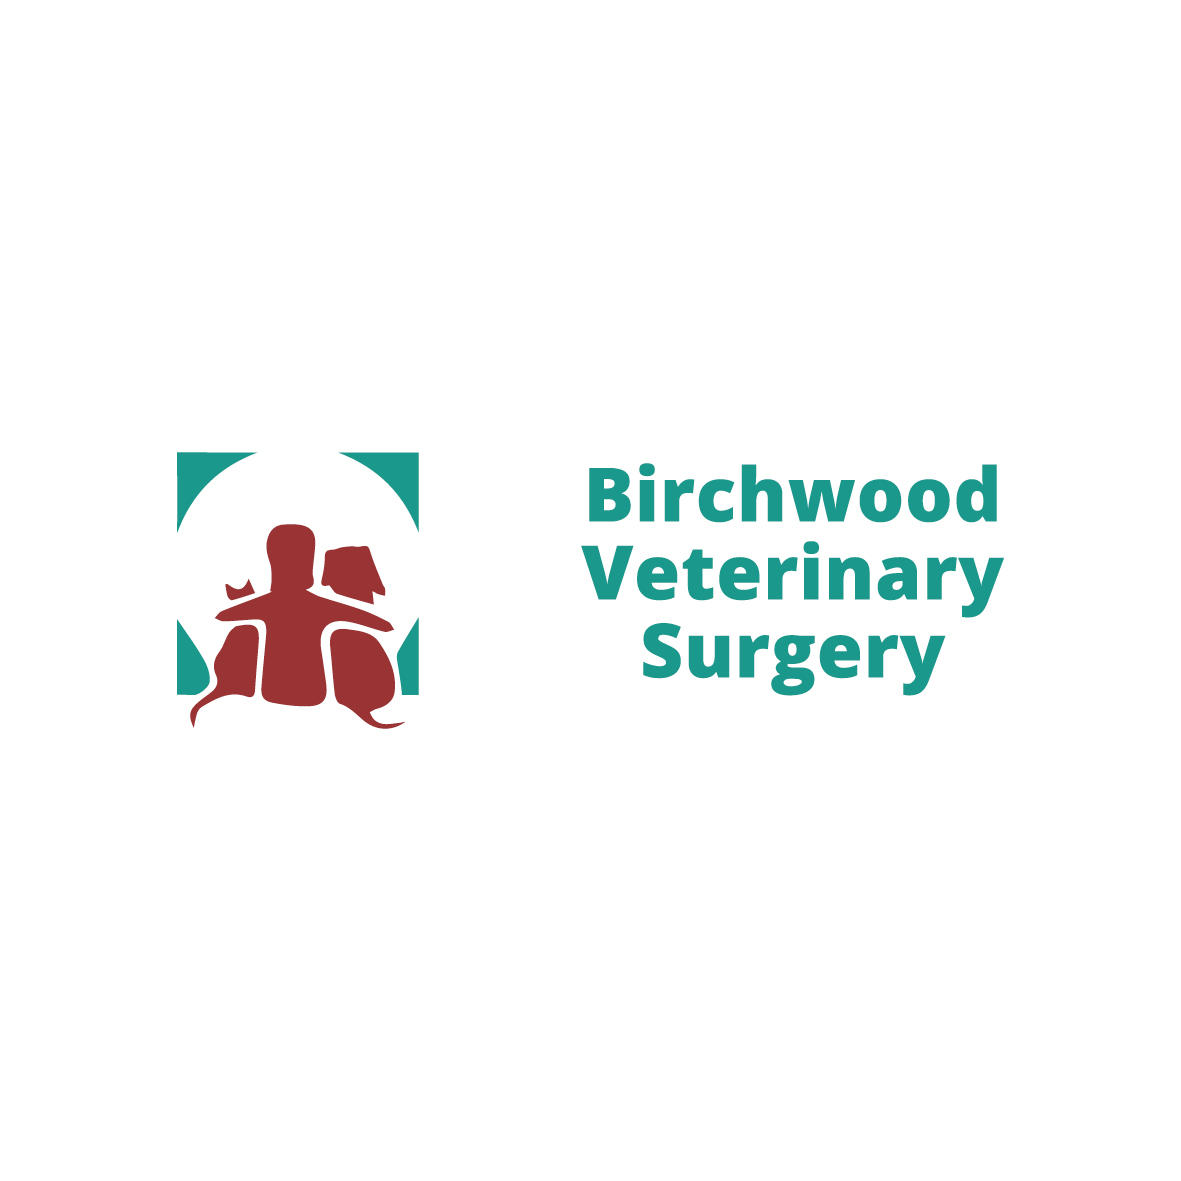 Willows Veterinary Group - Birchwood Vets Warrington 01925 912474